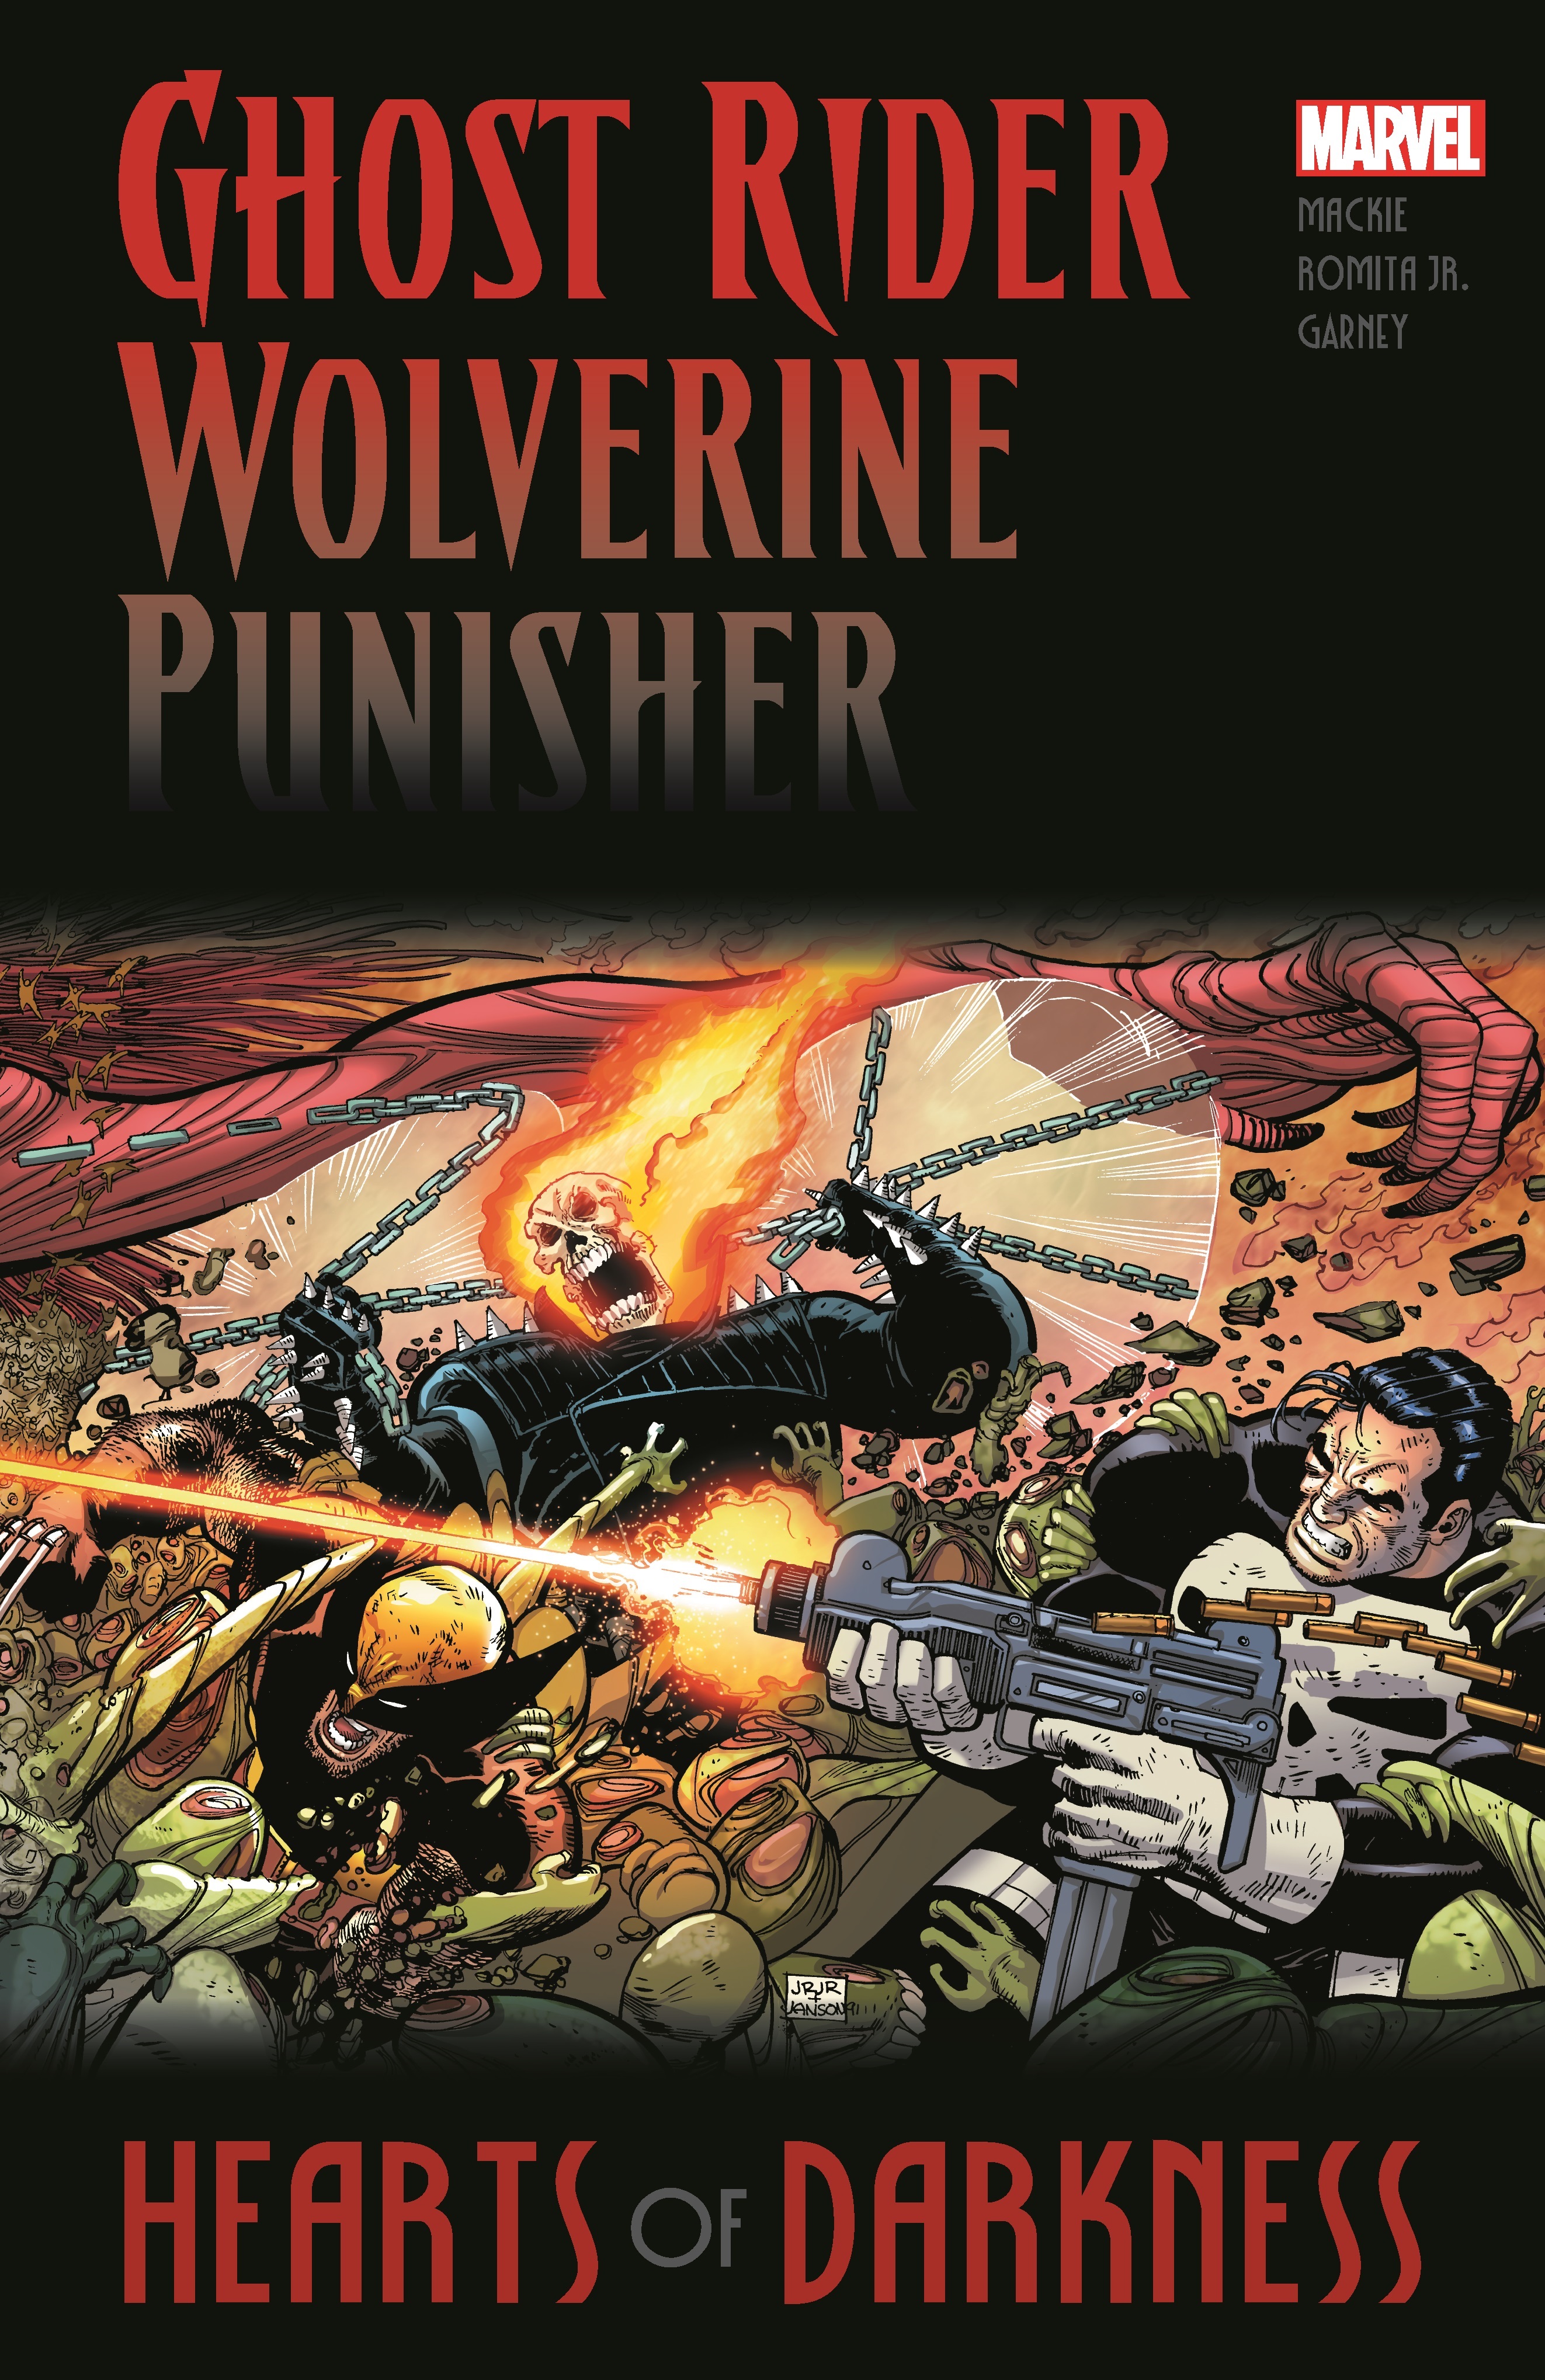 Ghost Rider Wolverine Punisher Graphic Novel Hearts of Darkness